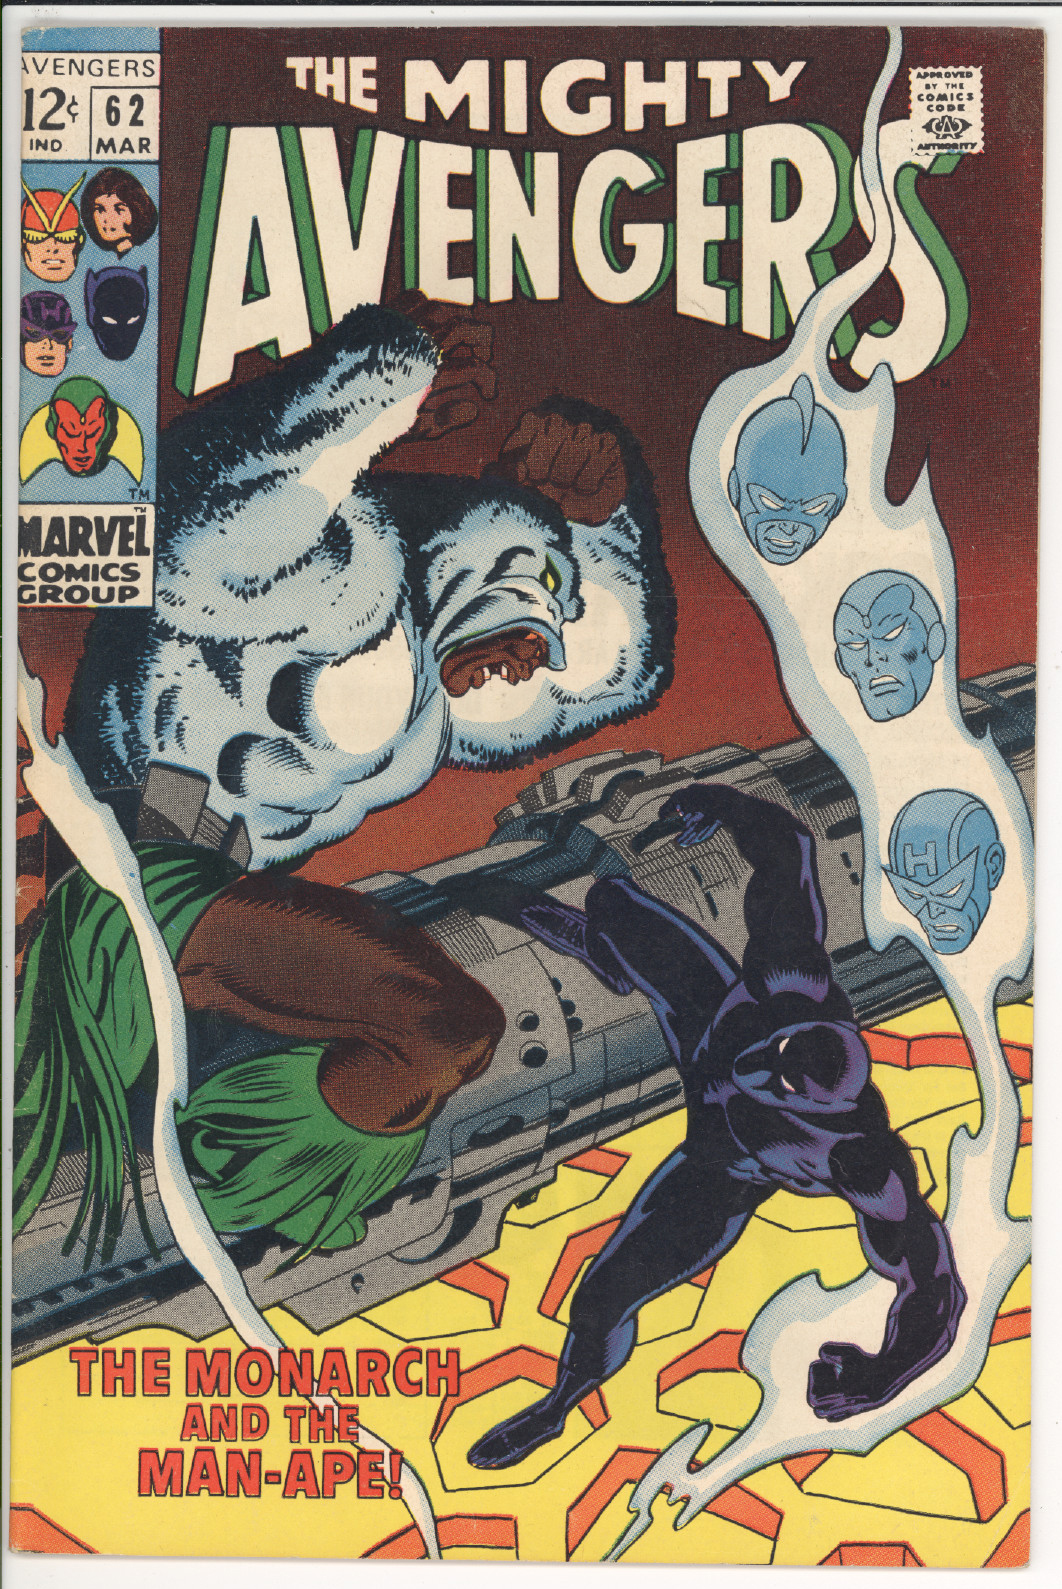 Avengers #62 front